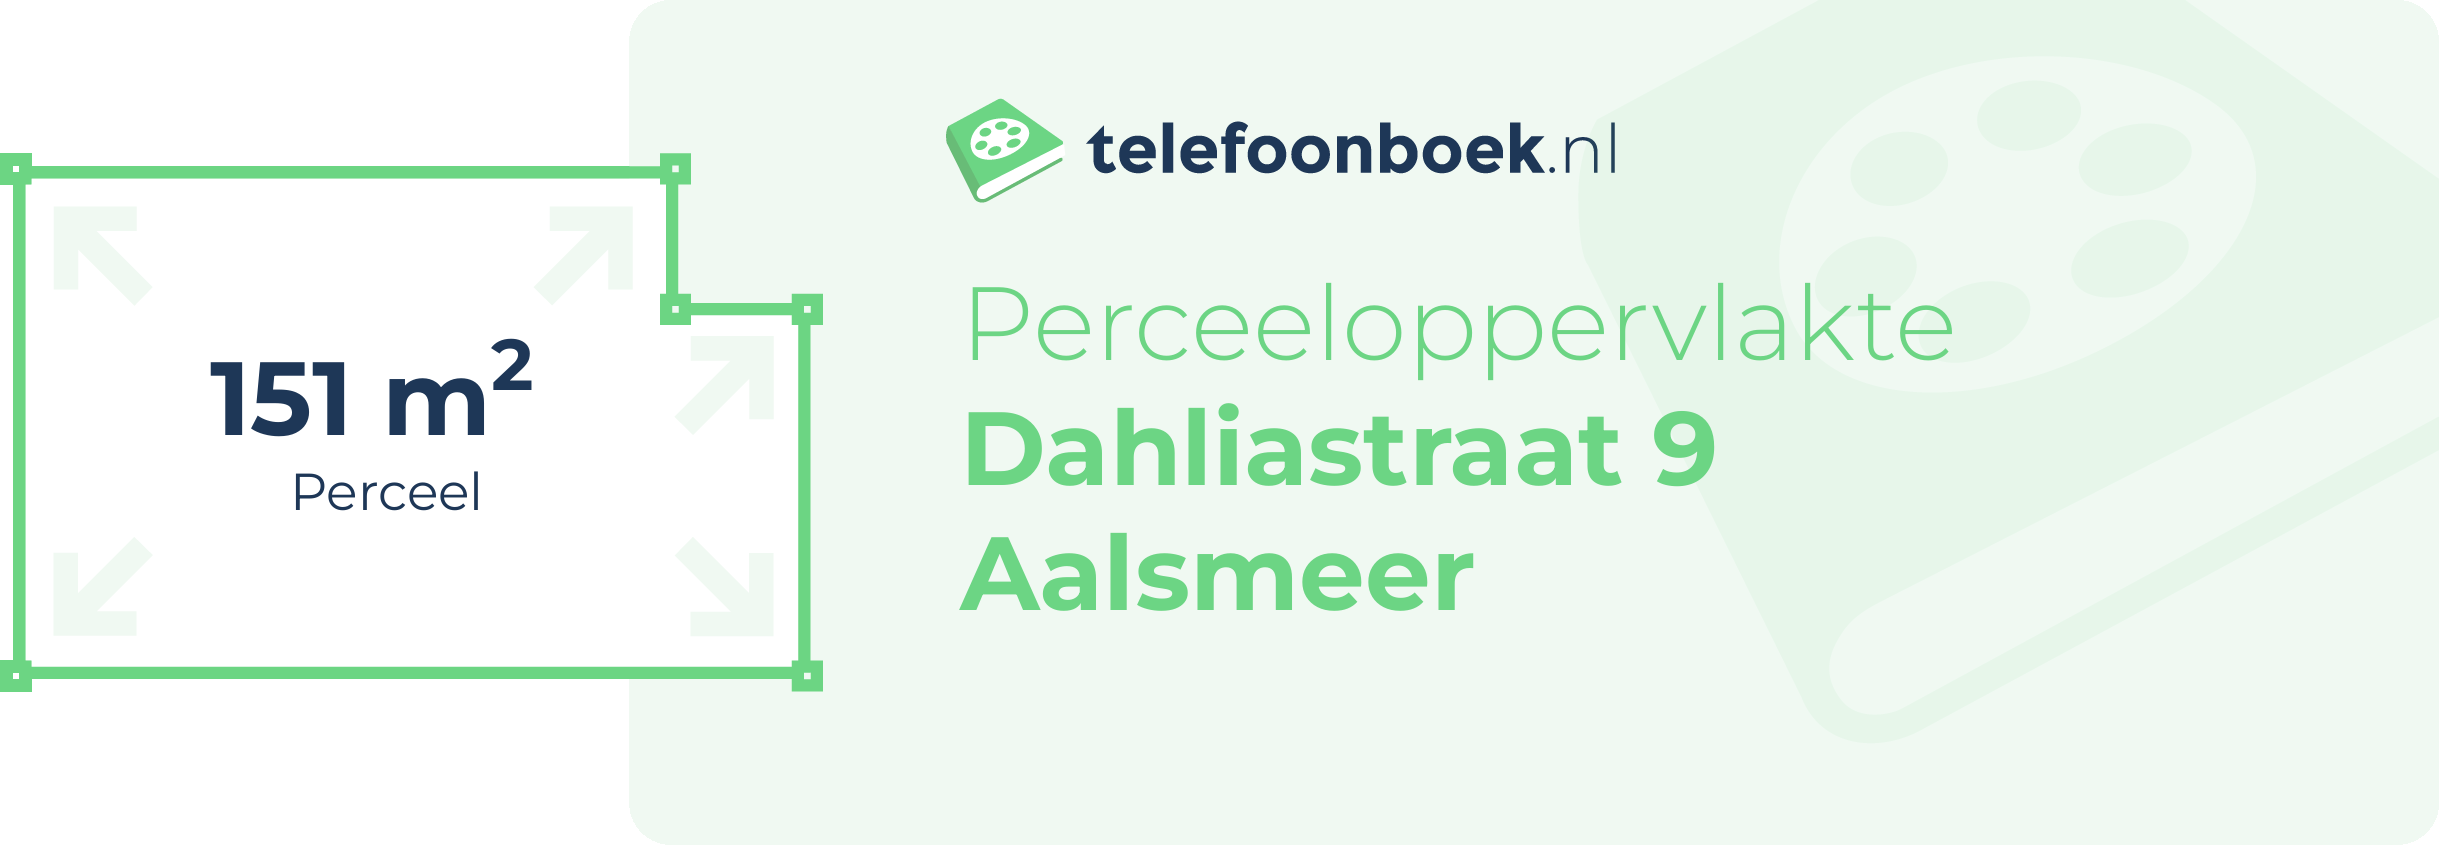 Perceeloppervlakte Dahliastraat 9 Aalsmeer